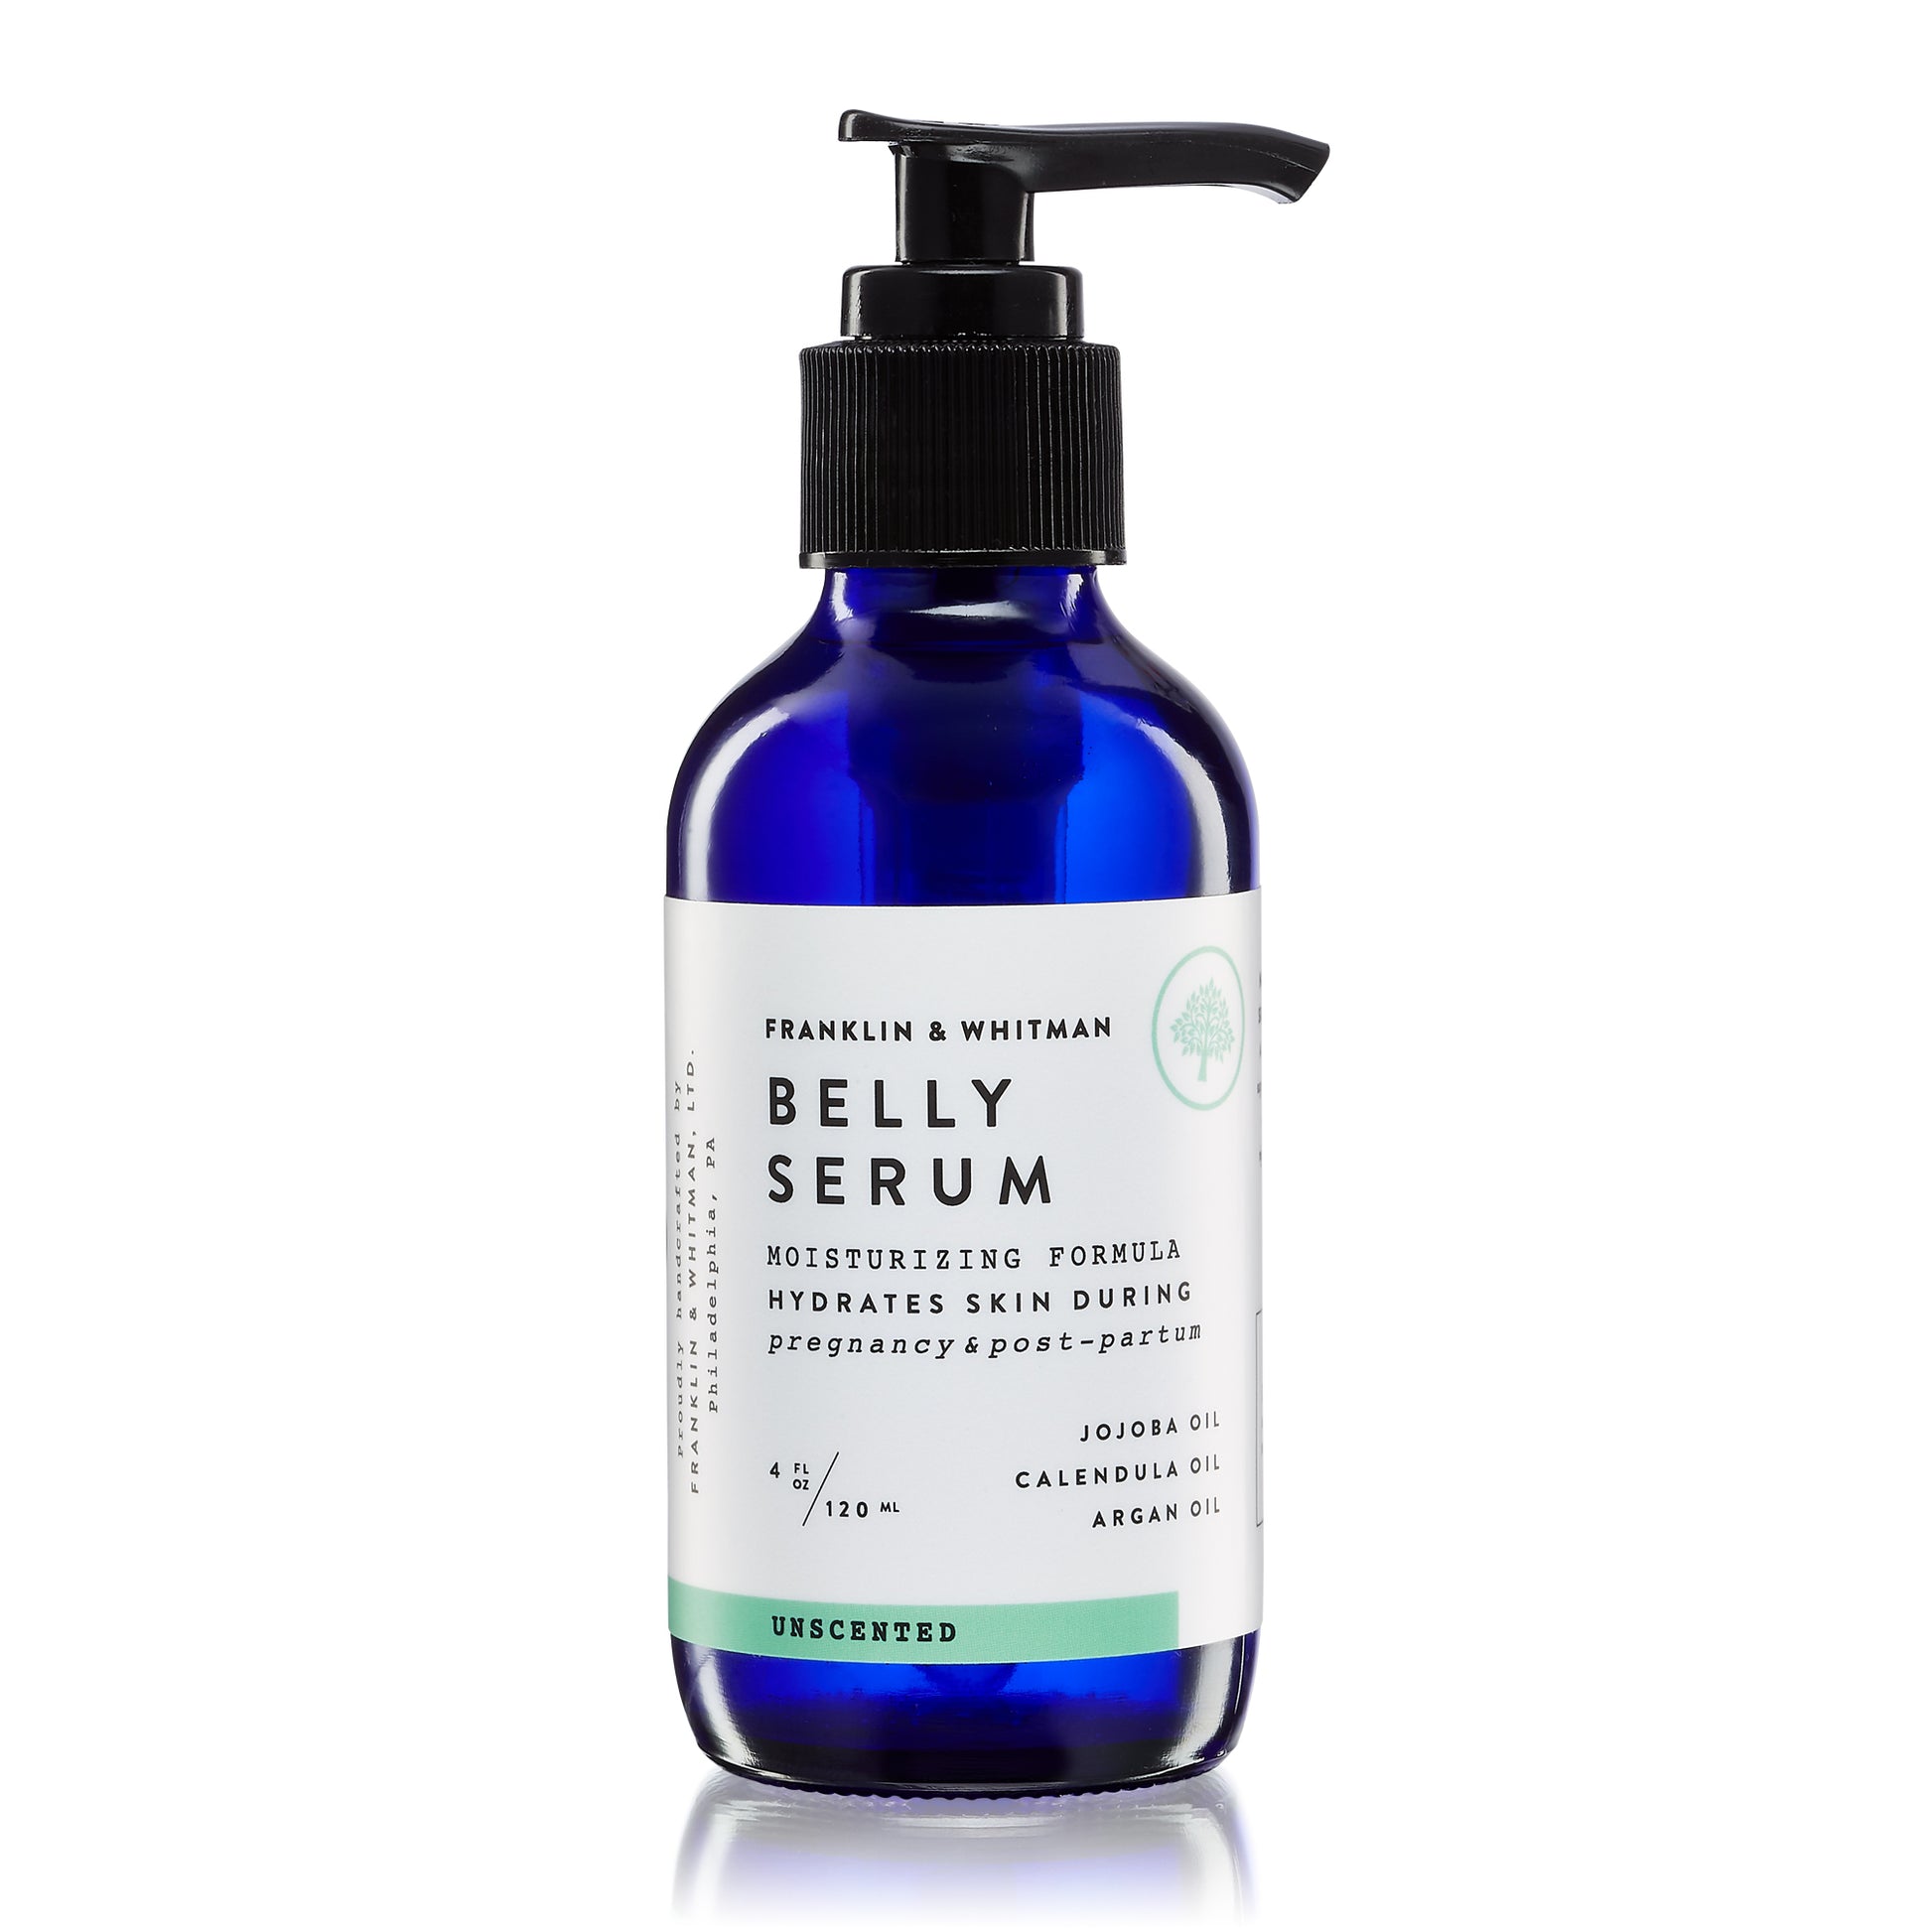 Vegan, plant based, cruelty free Belly Serum bottle for pregnant skin care